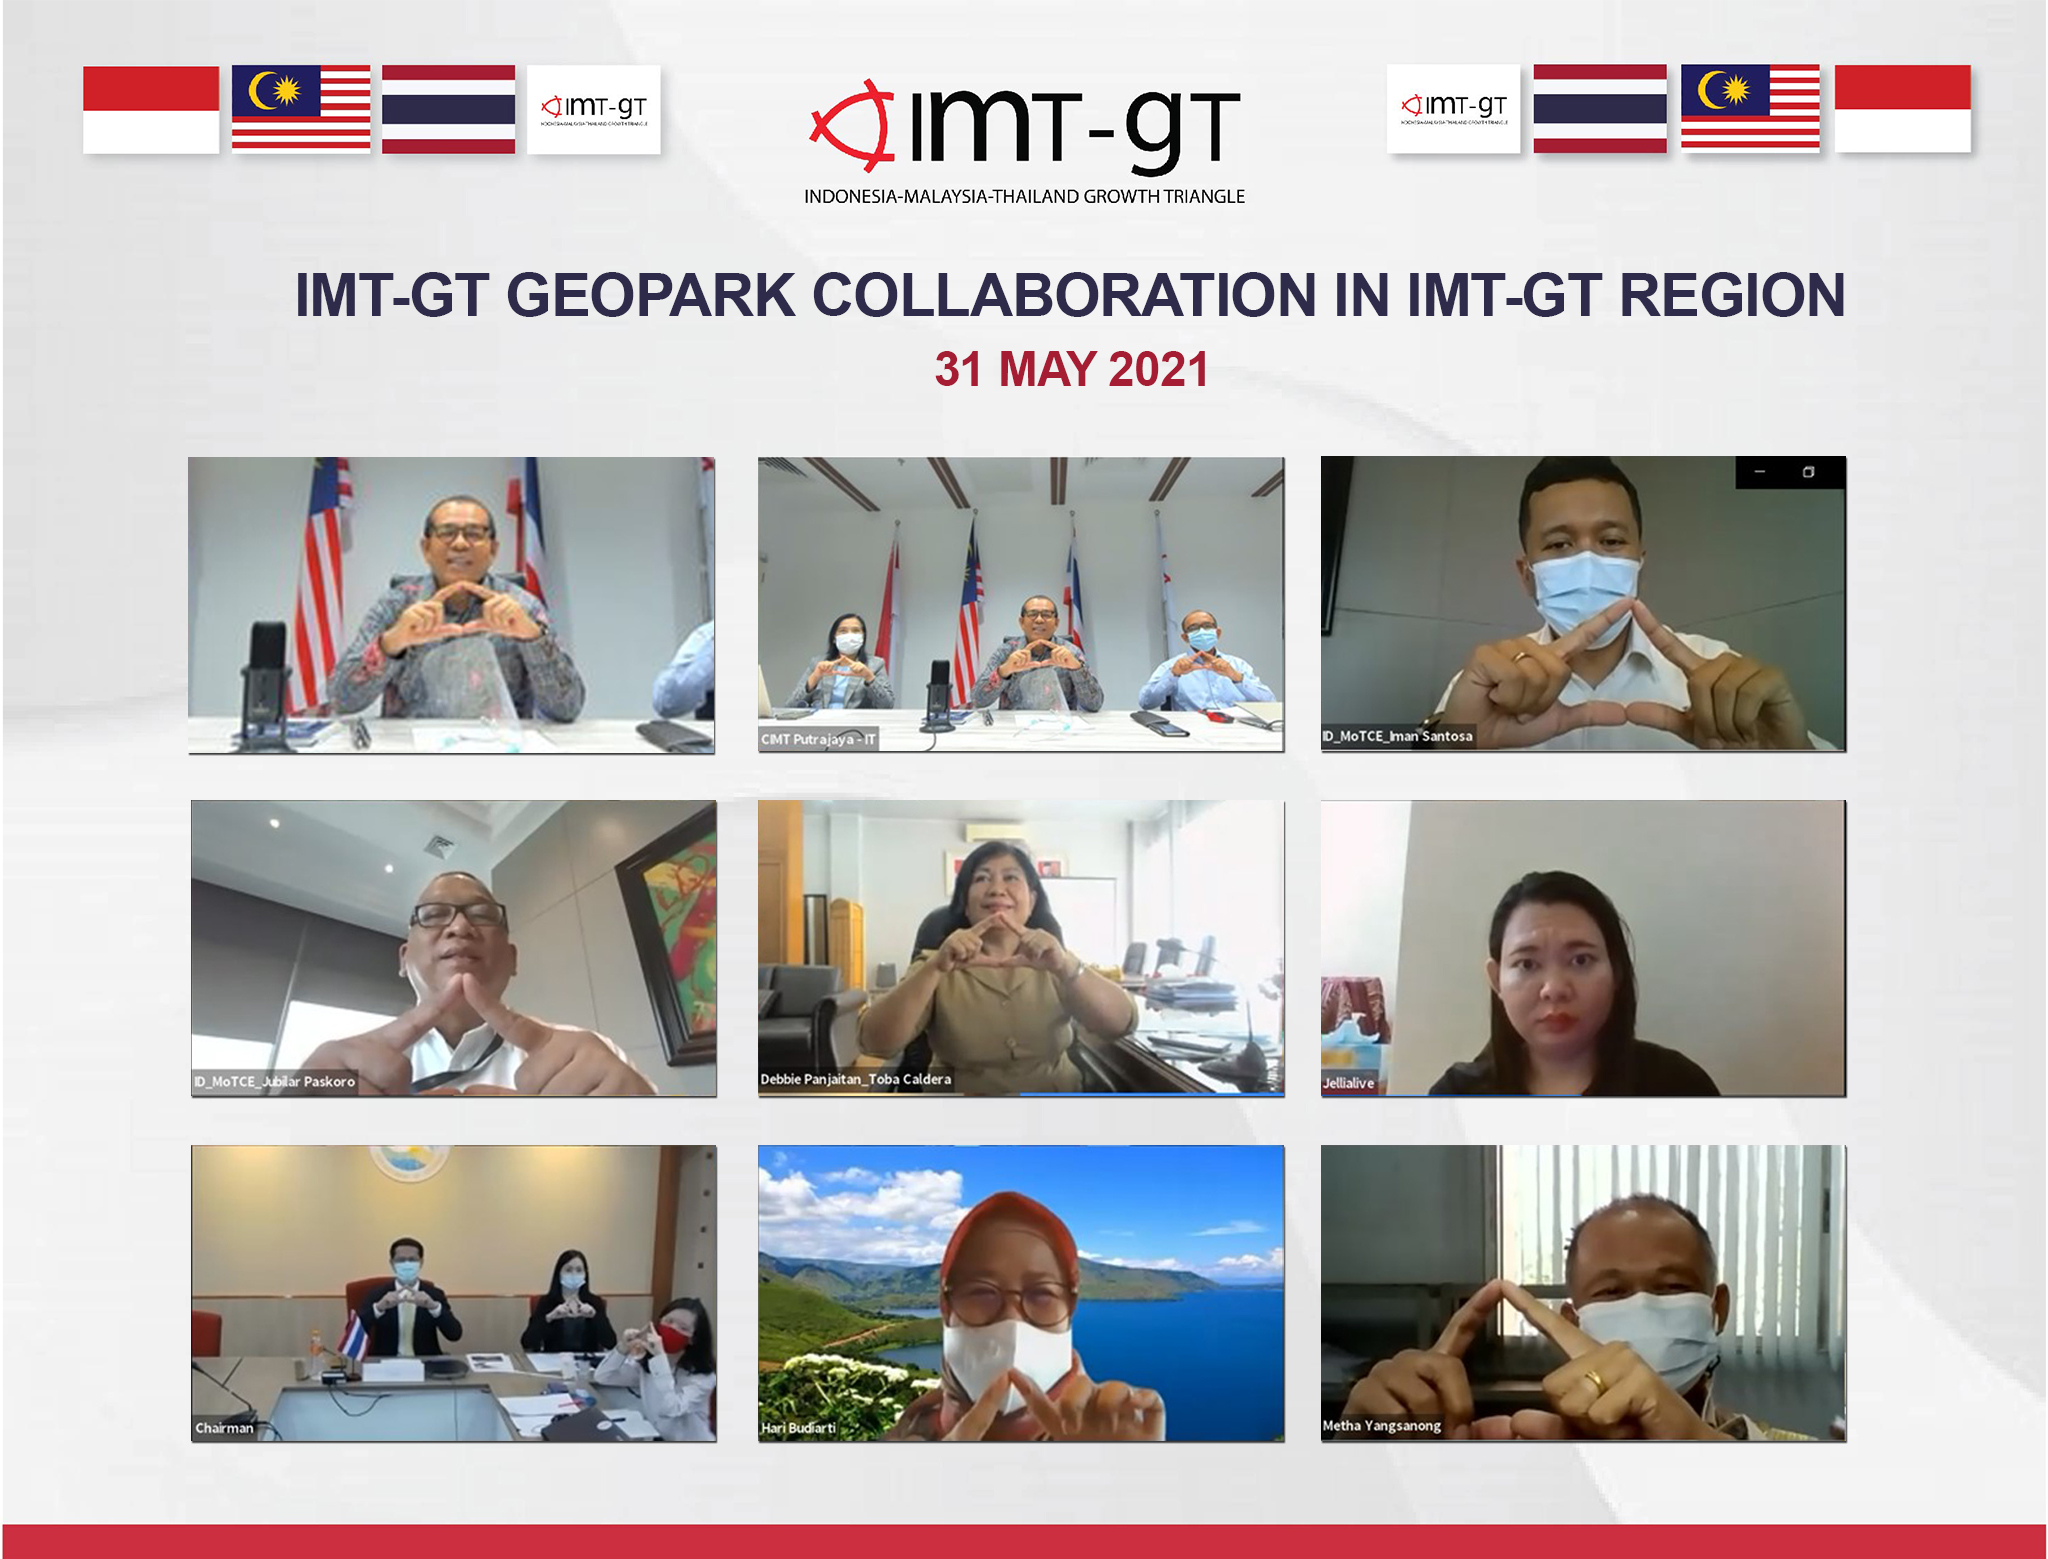 IMT-GT GEOPARK COLLABORATION IN IMT-GT REGION